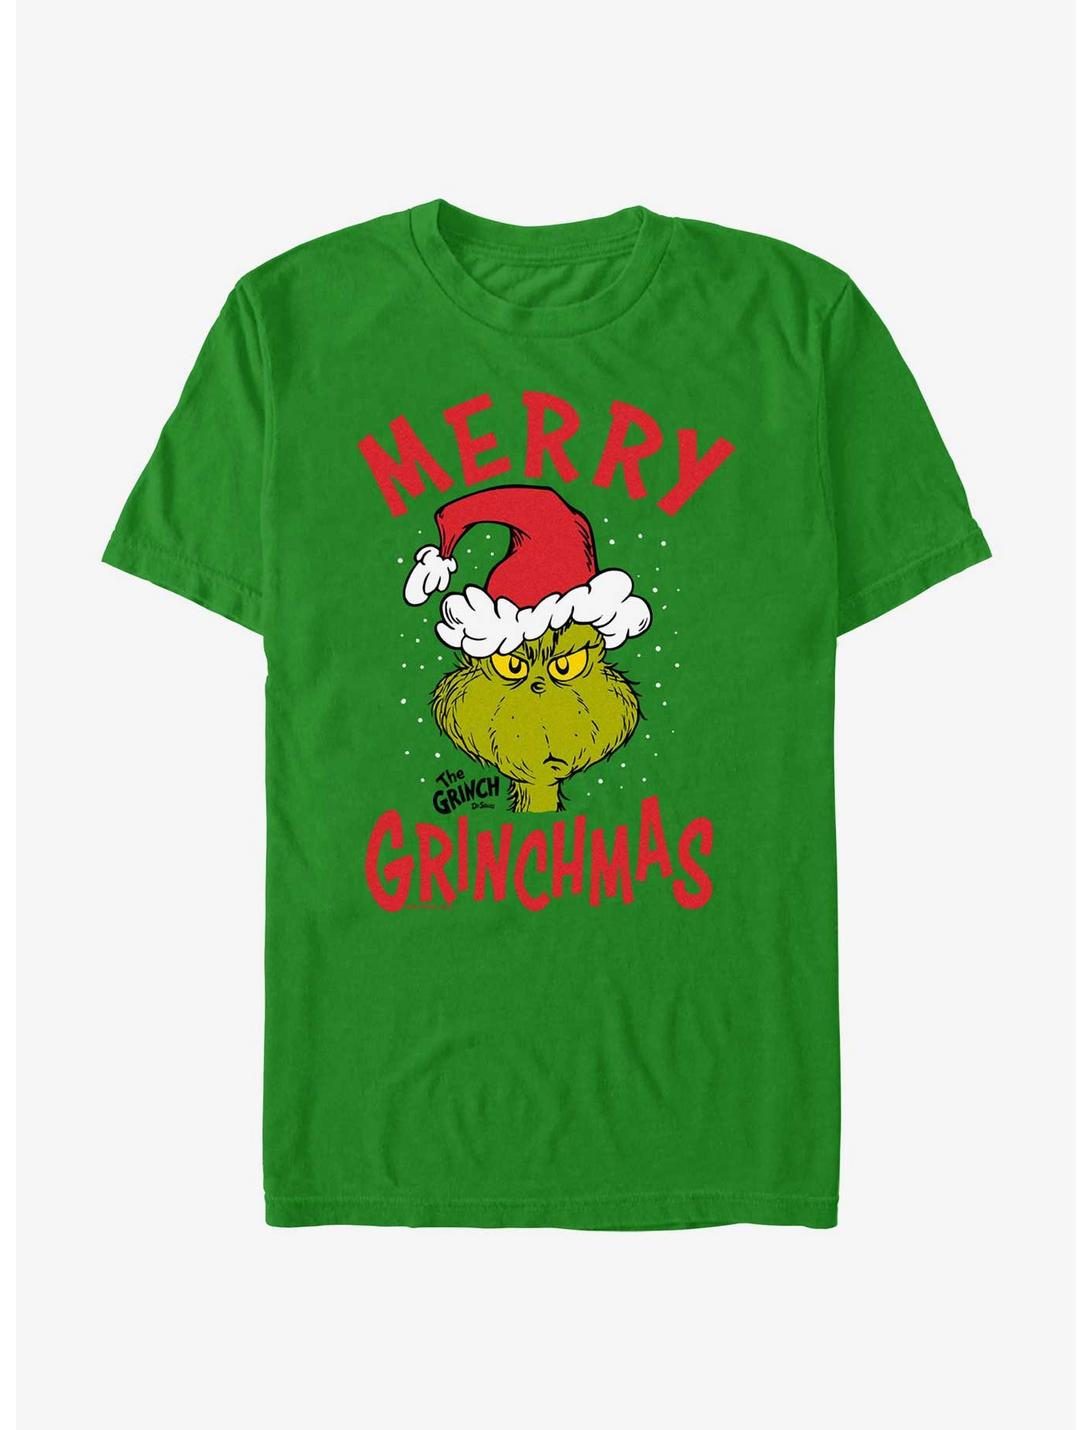 Dr. Seuss Merry Grinchmas T-Shirt, KELLY, hi-res